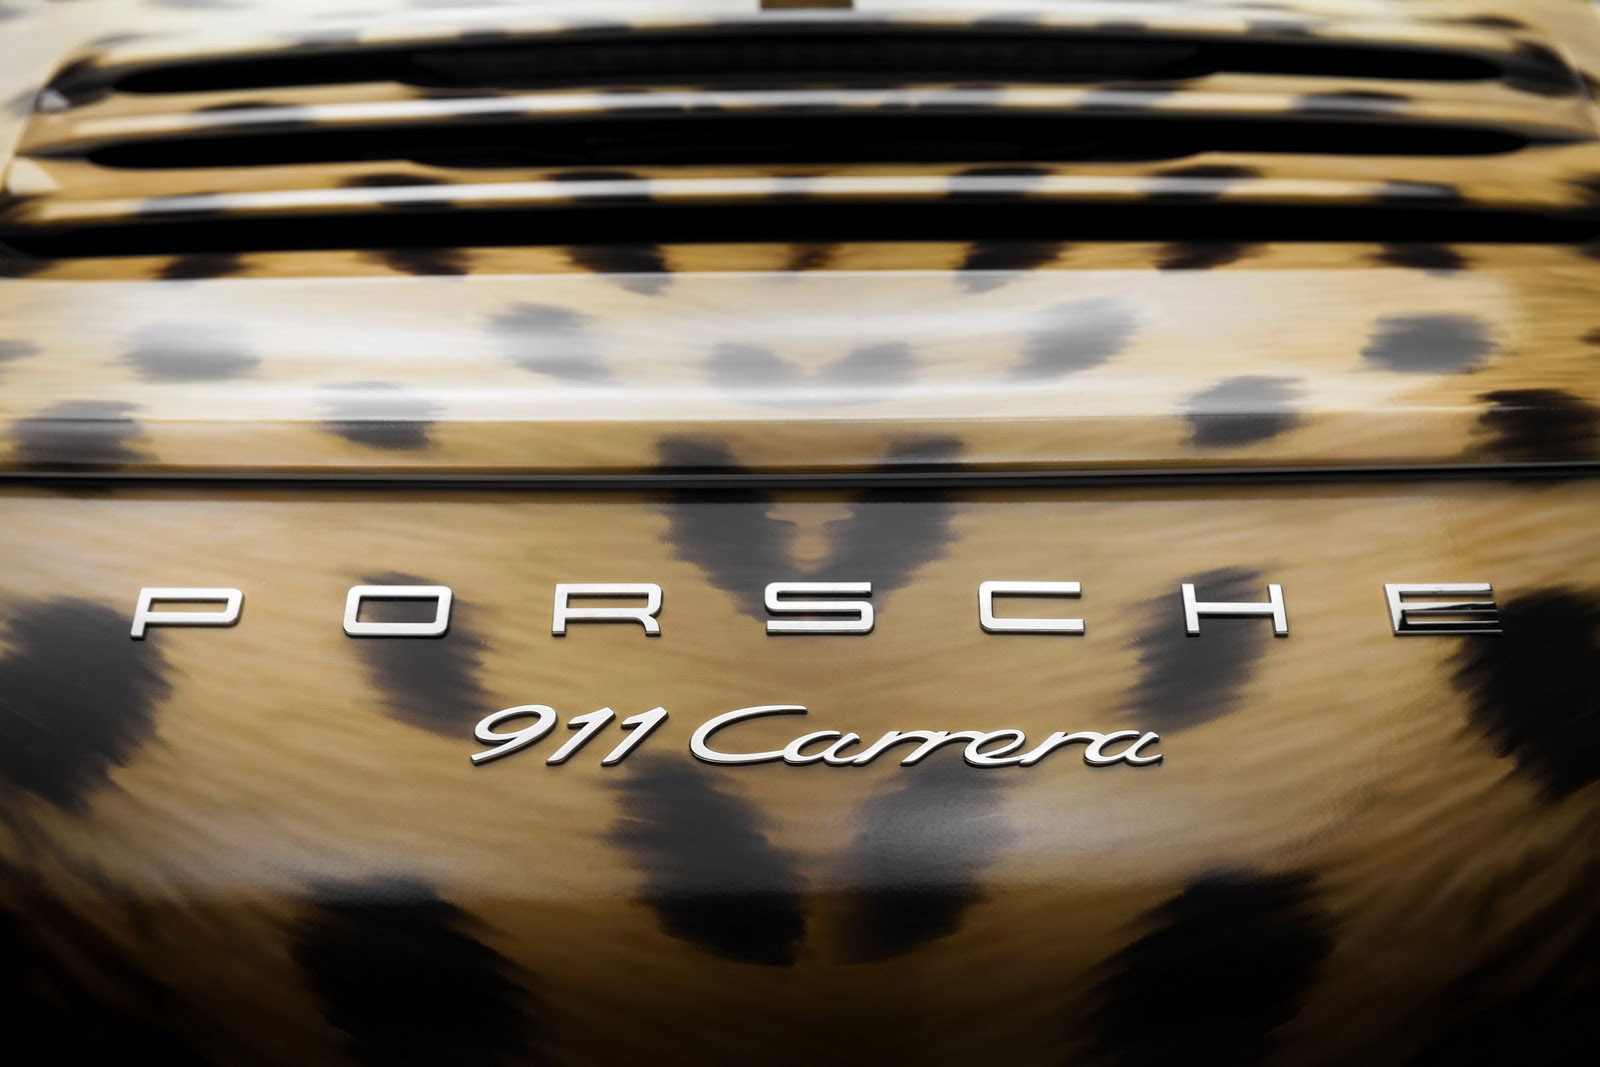 Porsche 911 Carrera by Adidas